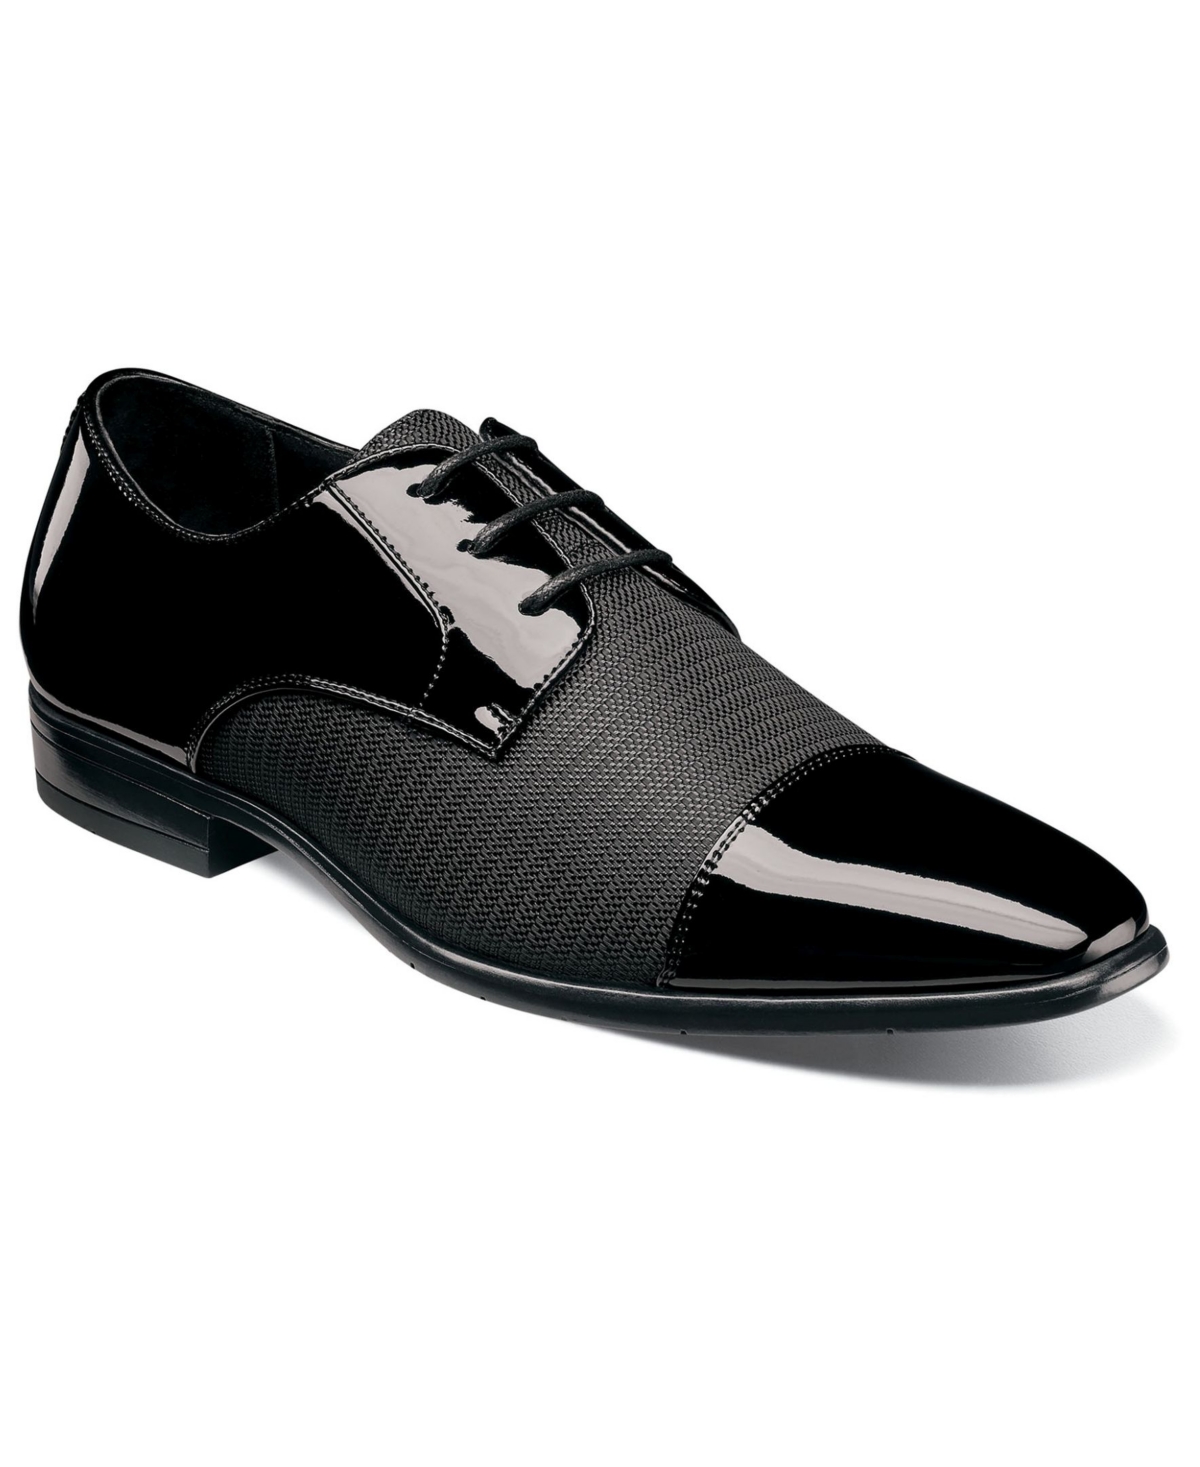 Men's Pharoah Cap Toe Oxford Shoes - Black